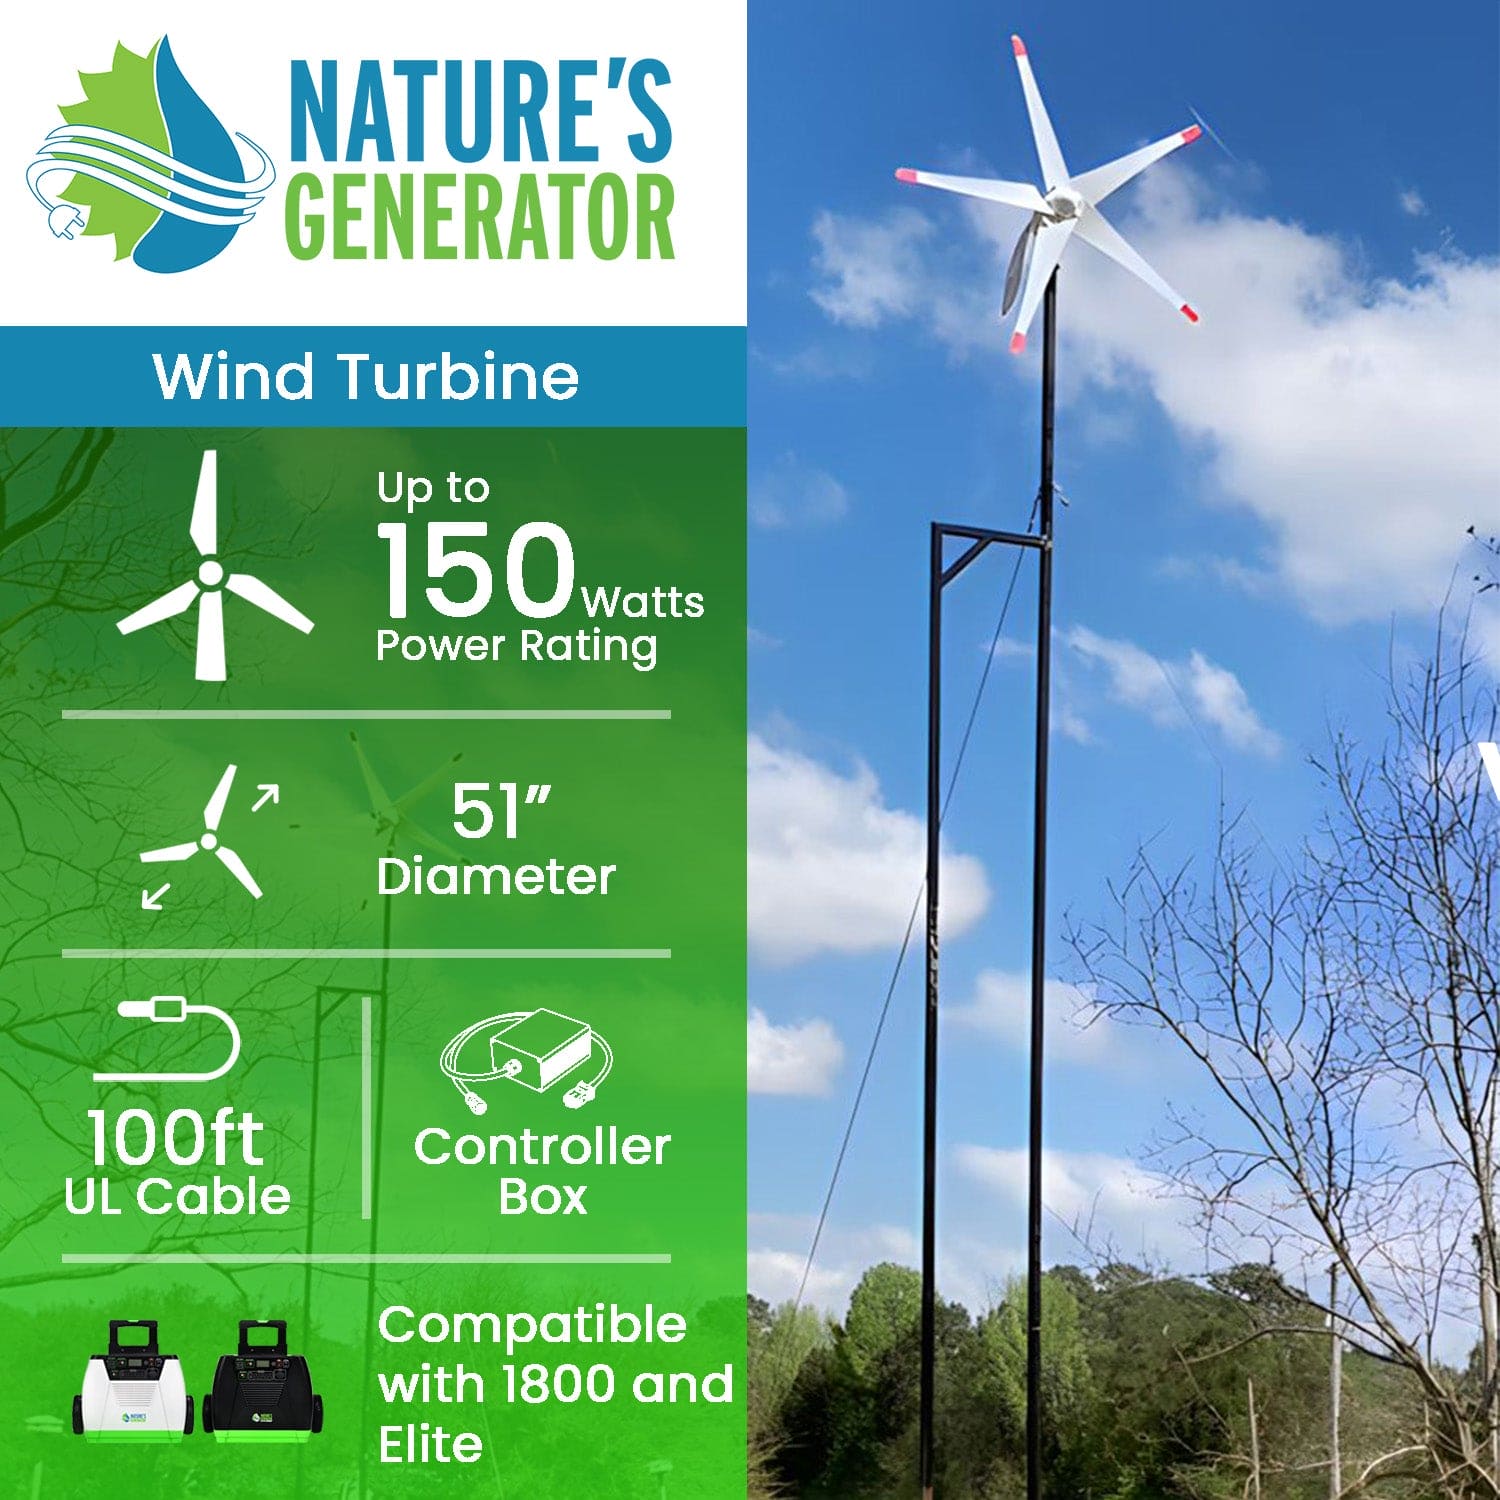 Nature's Generator Wind Turbine